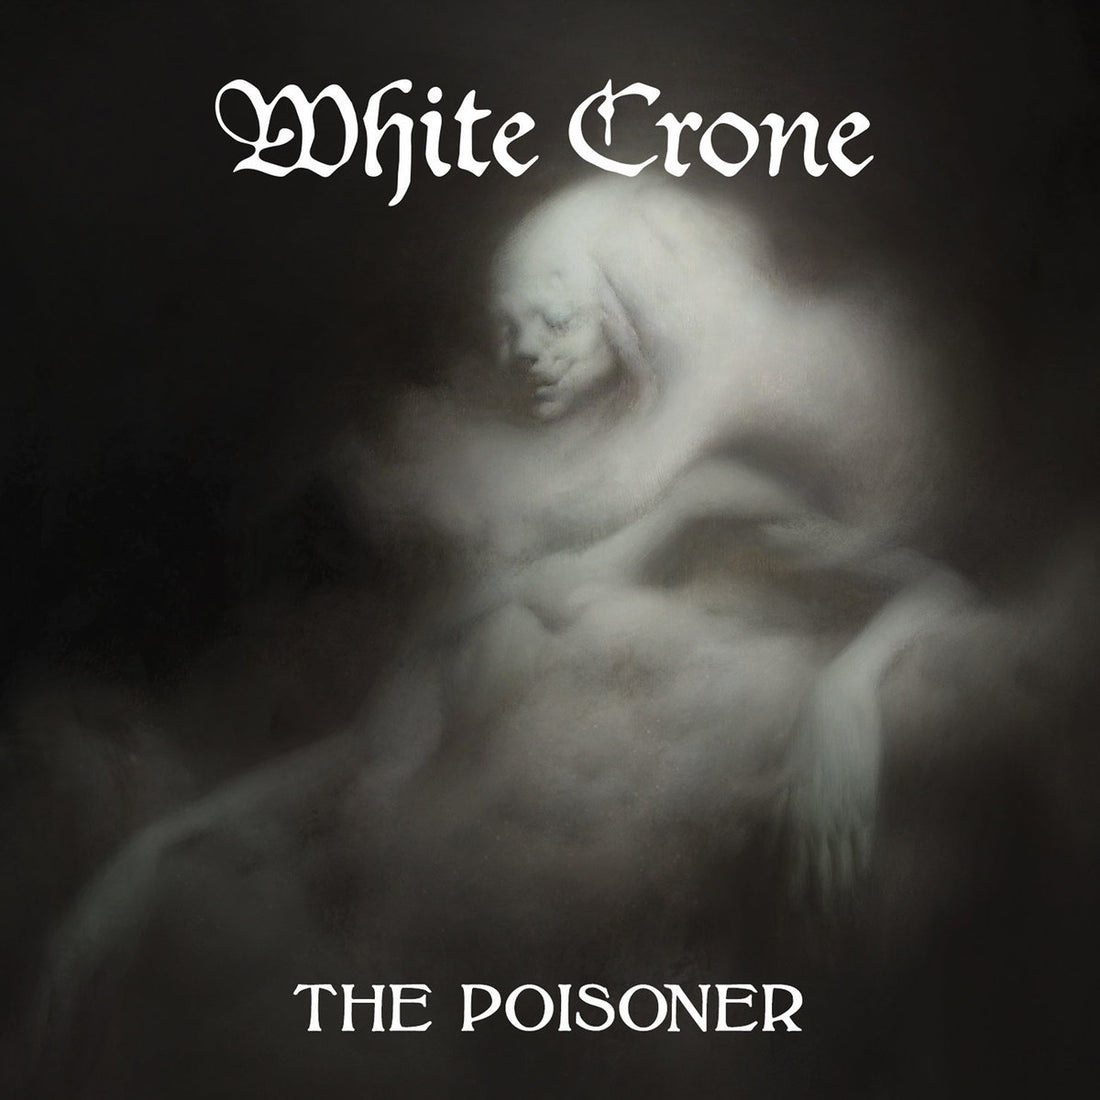 White Crone